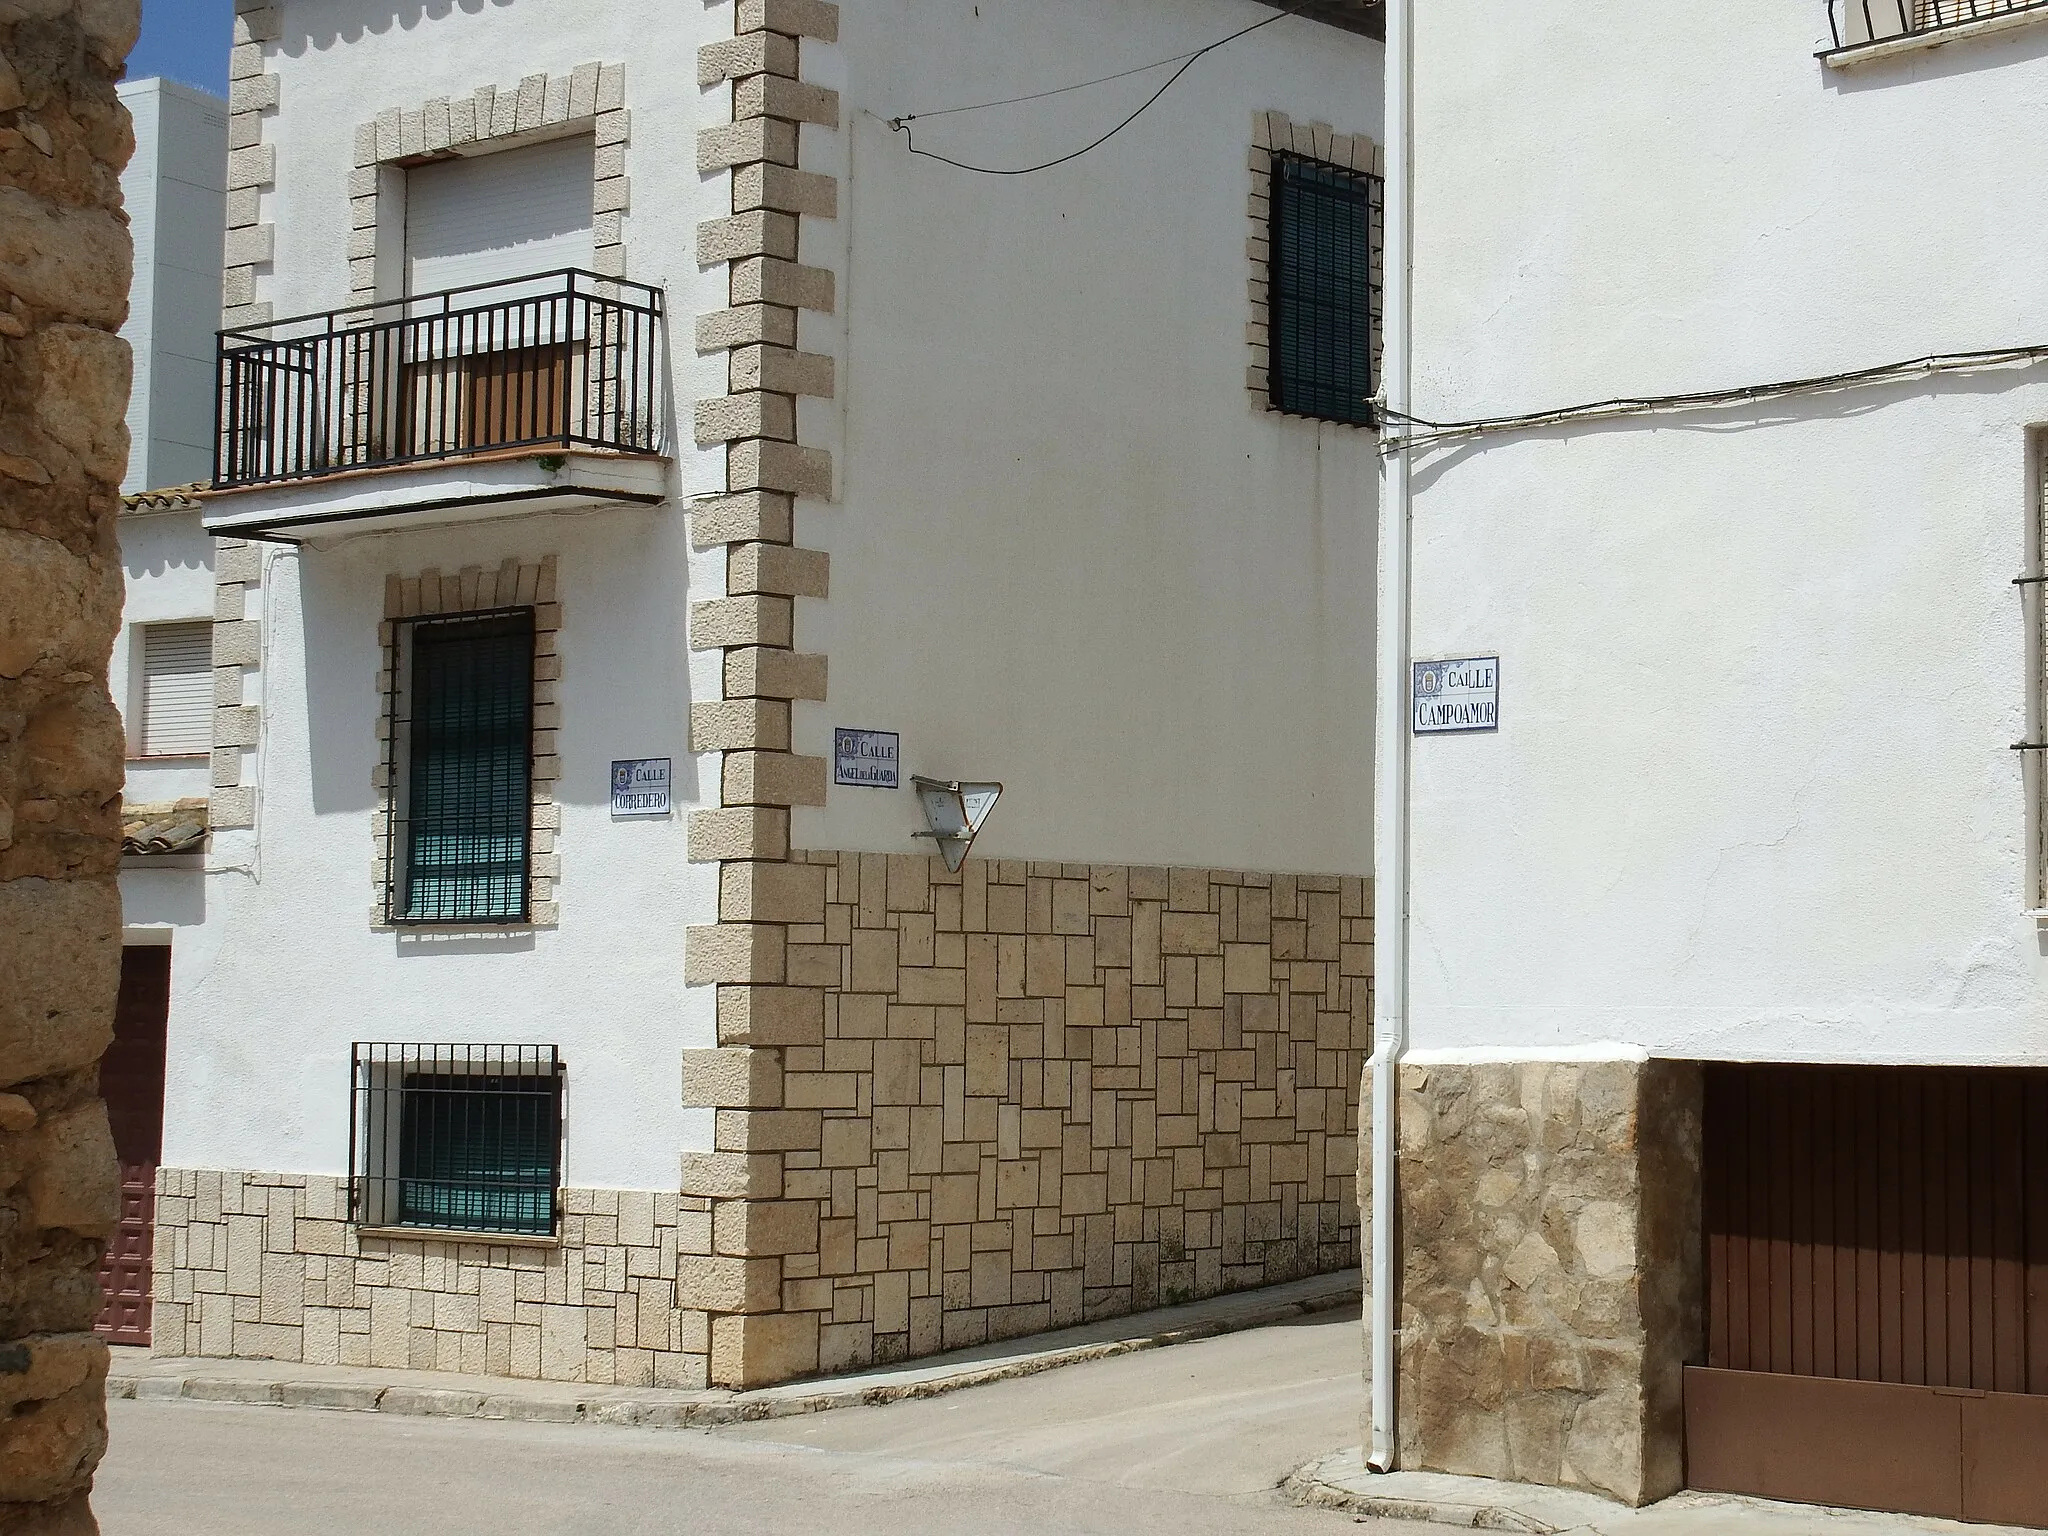 Bild von Castilla-La Mancha